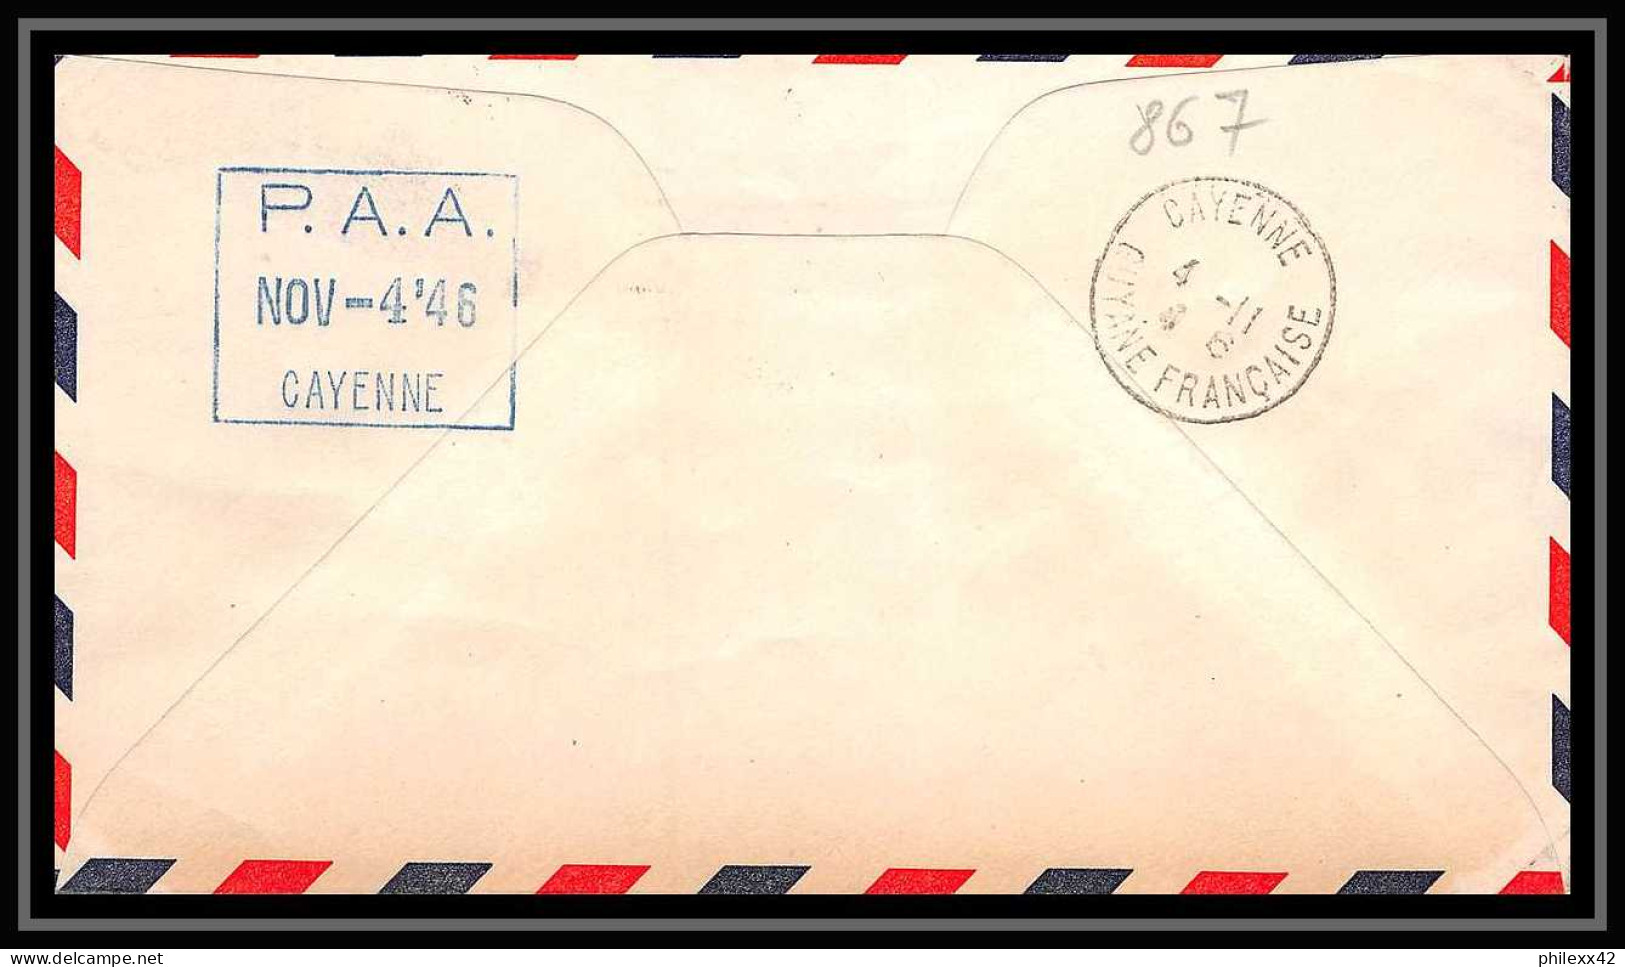 0867 Lettre Aviation (Airmail Cover Luftpost) USA Premier Vol (first Flight) 1946 Cicero Illinois Cayenne Guyane - Briefe U. Dokumente